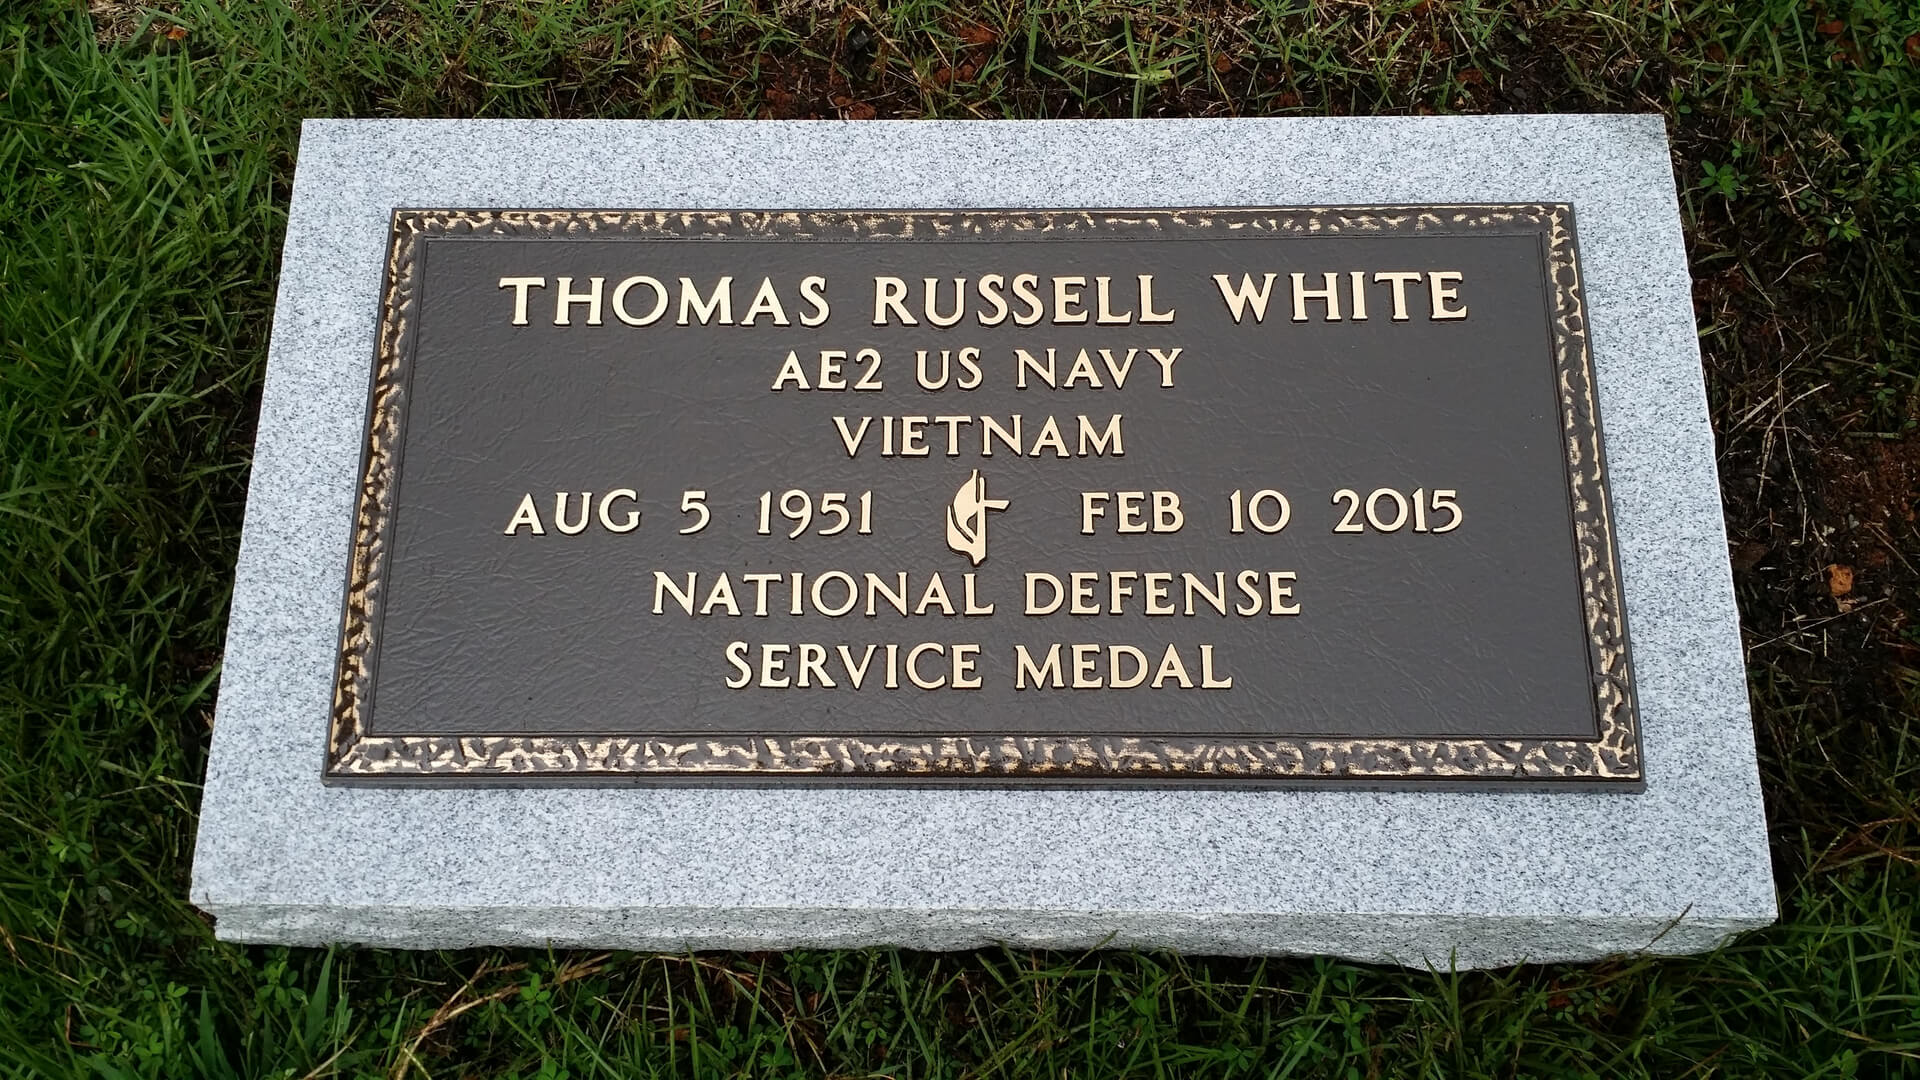 Thomas Russell White Memorial Plaque